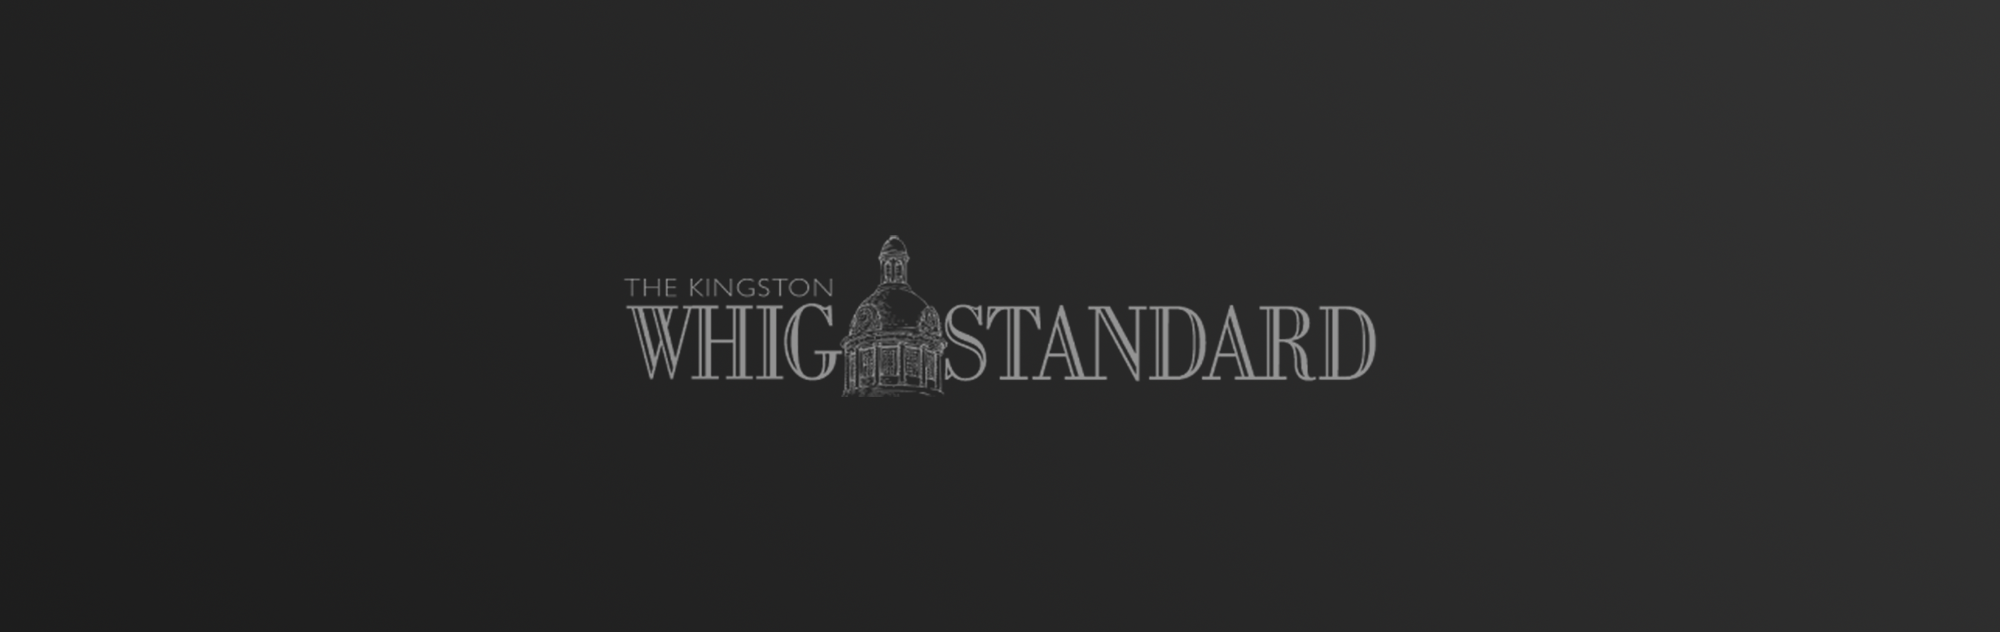 The Kingston Whig Standard logo on dark gradient background